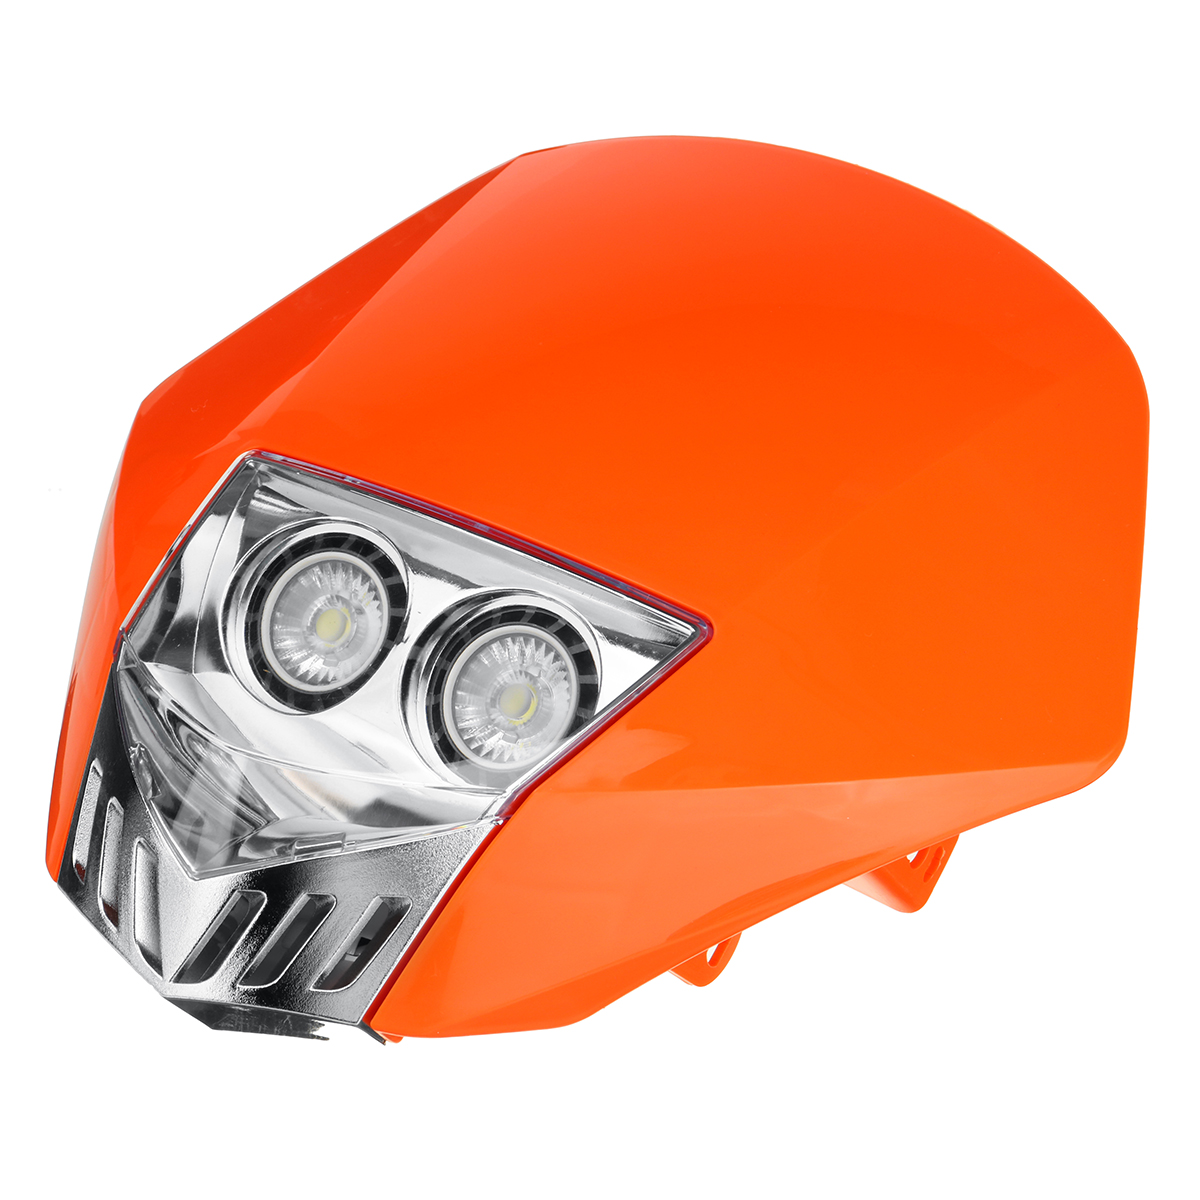 12V 35W Motorcycle LED Headlamp Headlight for EXC XCF SX F SMR Dirt Bike